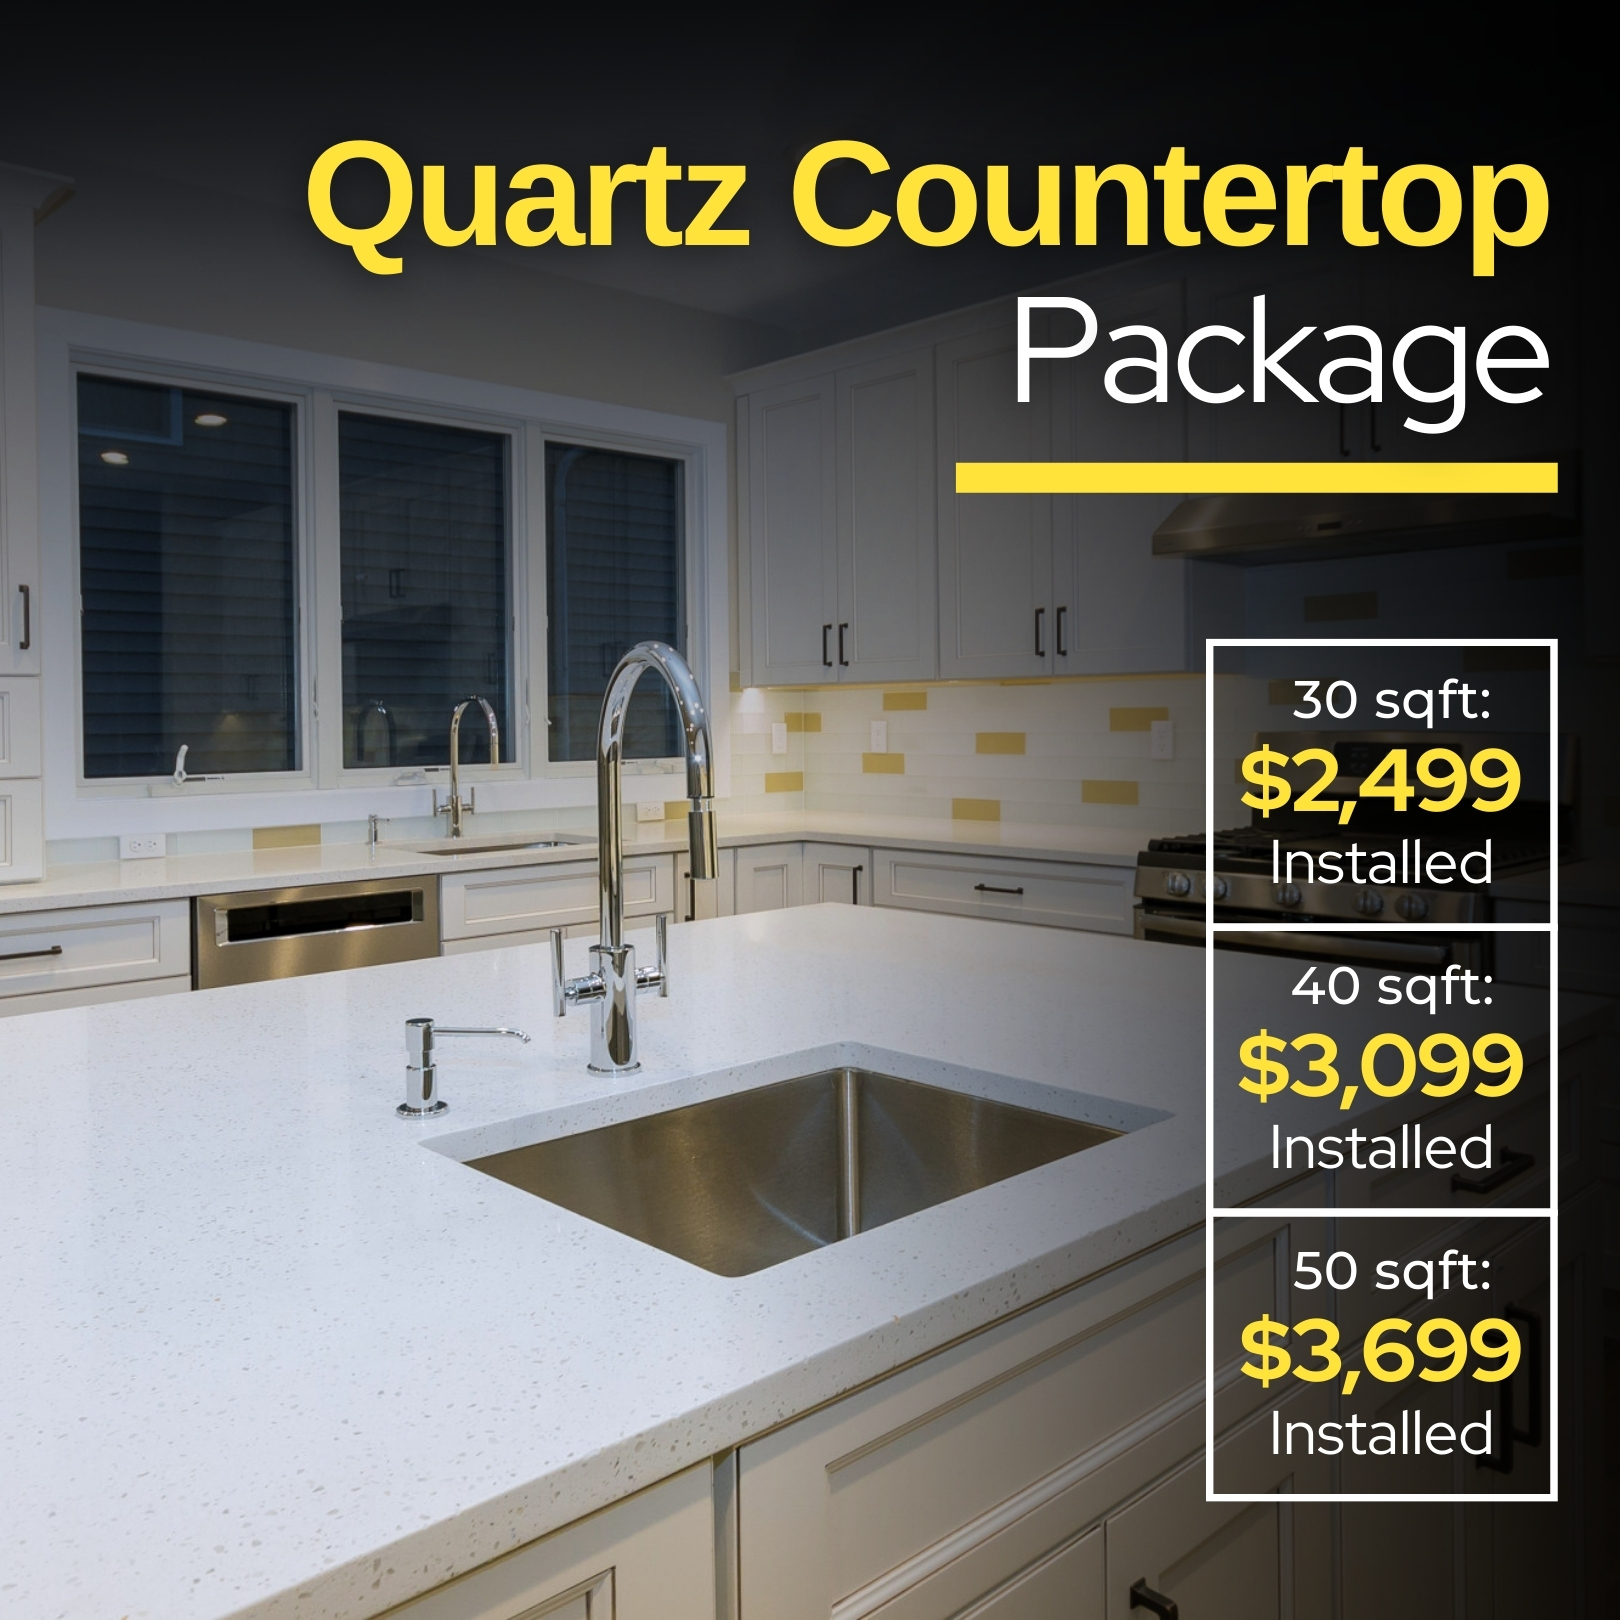 Tri-Cities - Square - 3-Tier Quartz Countertop Package